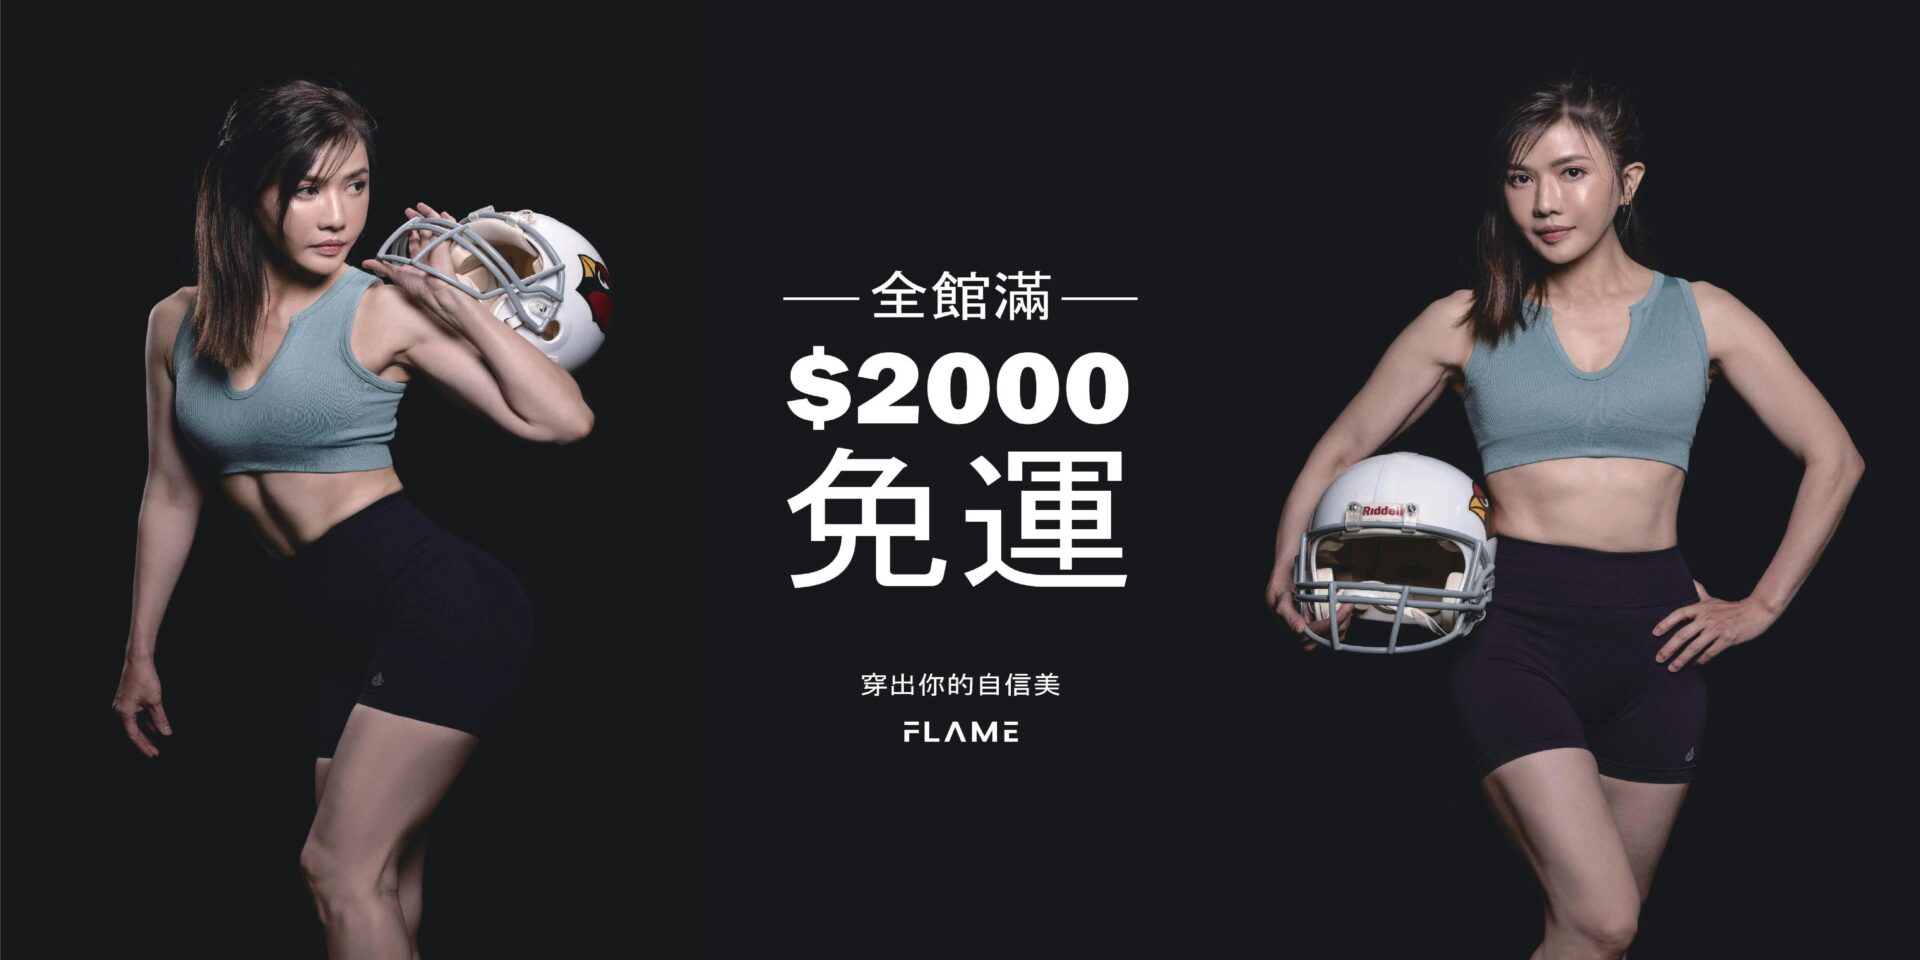 Flame2000免運